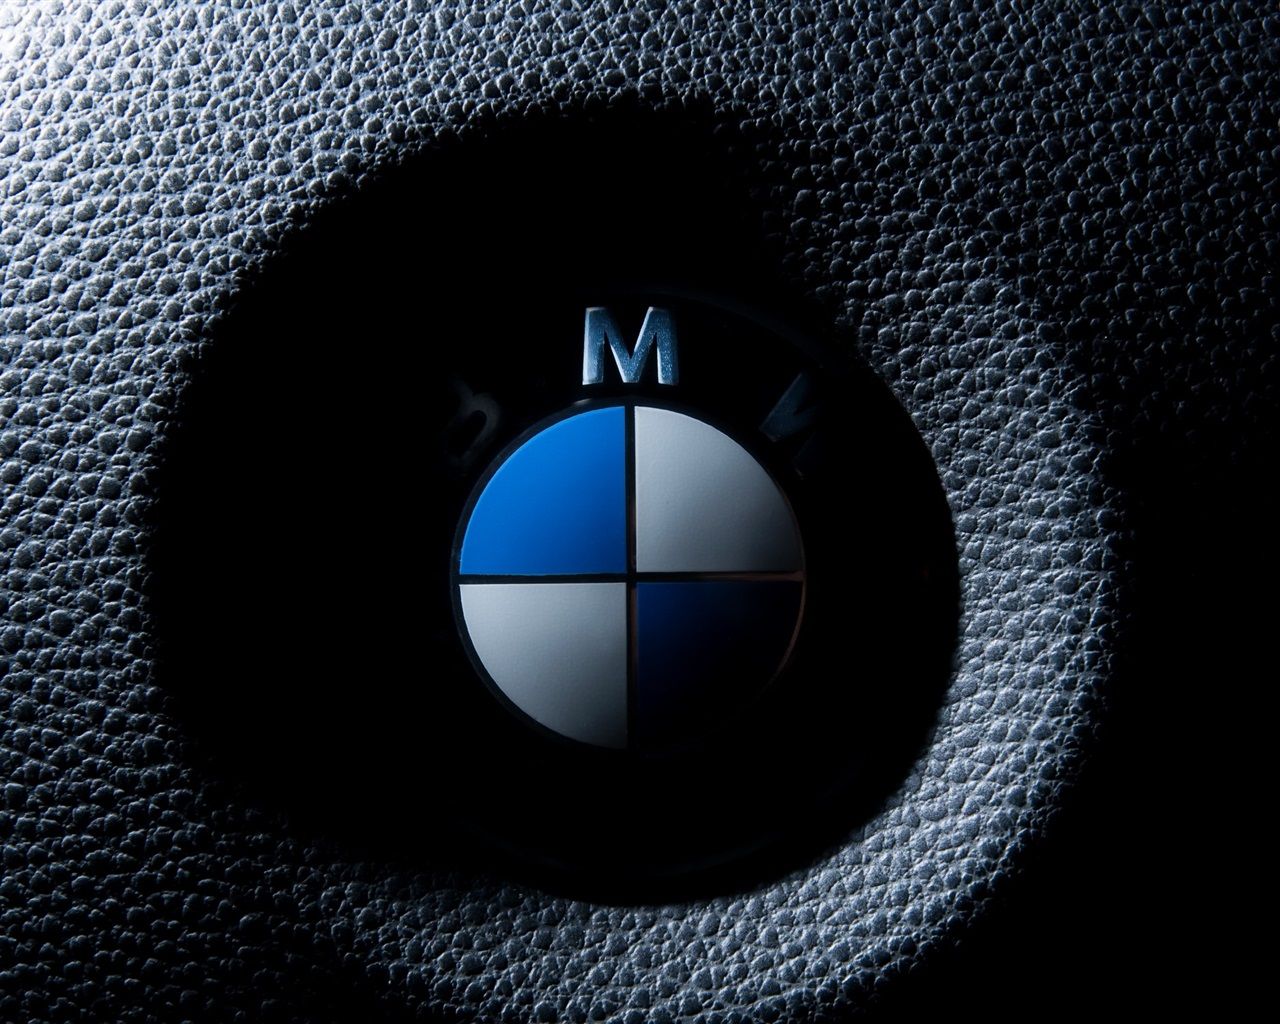 Wallpaper BMW logo macro photography 2560x1440 QHD Picture, Image